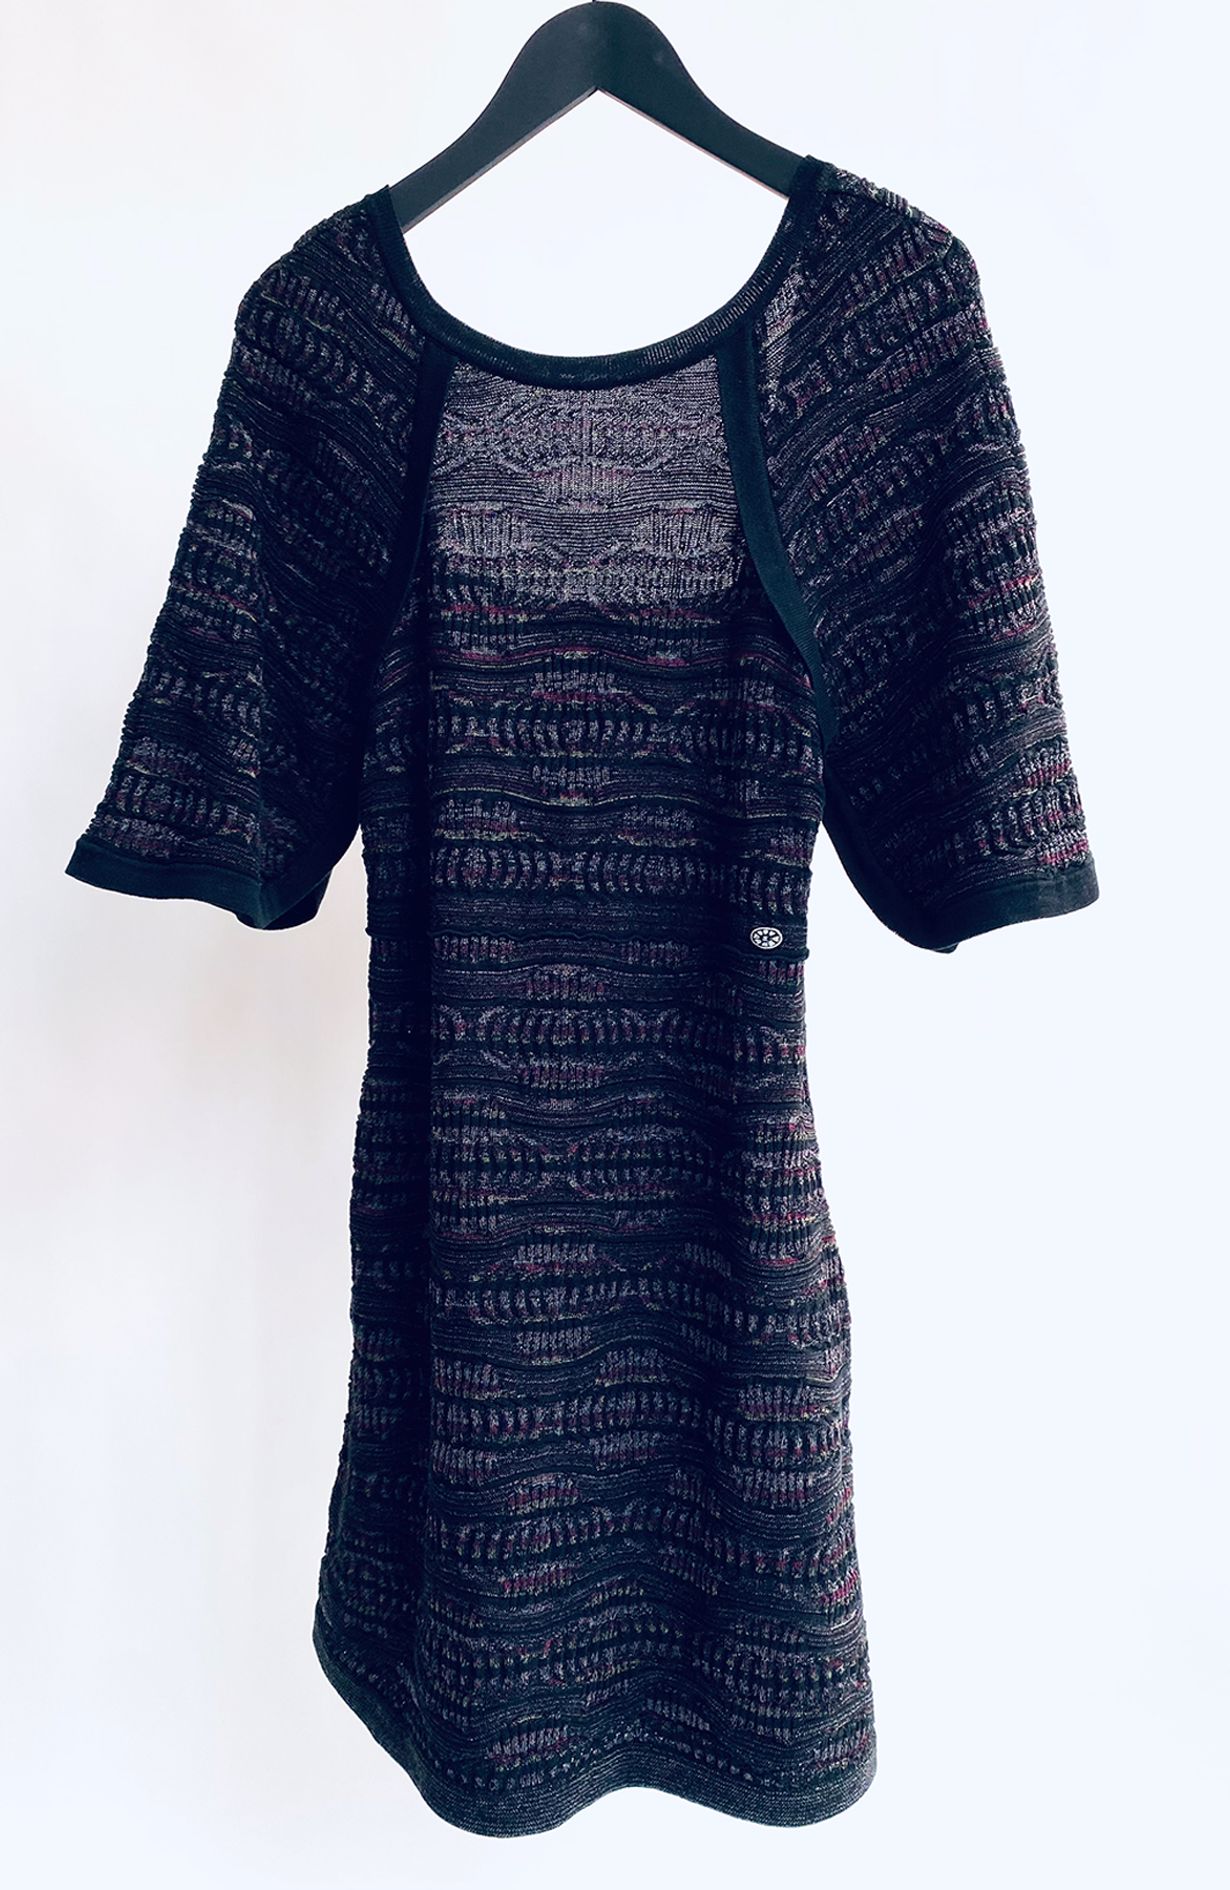 Chanel dress black/purple/silver size F38